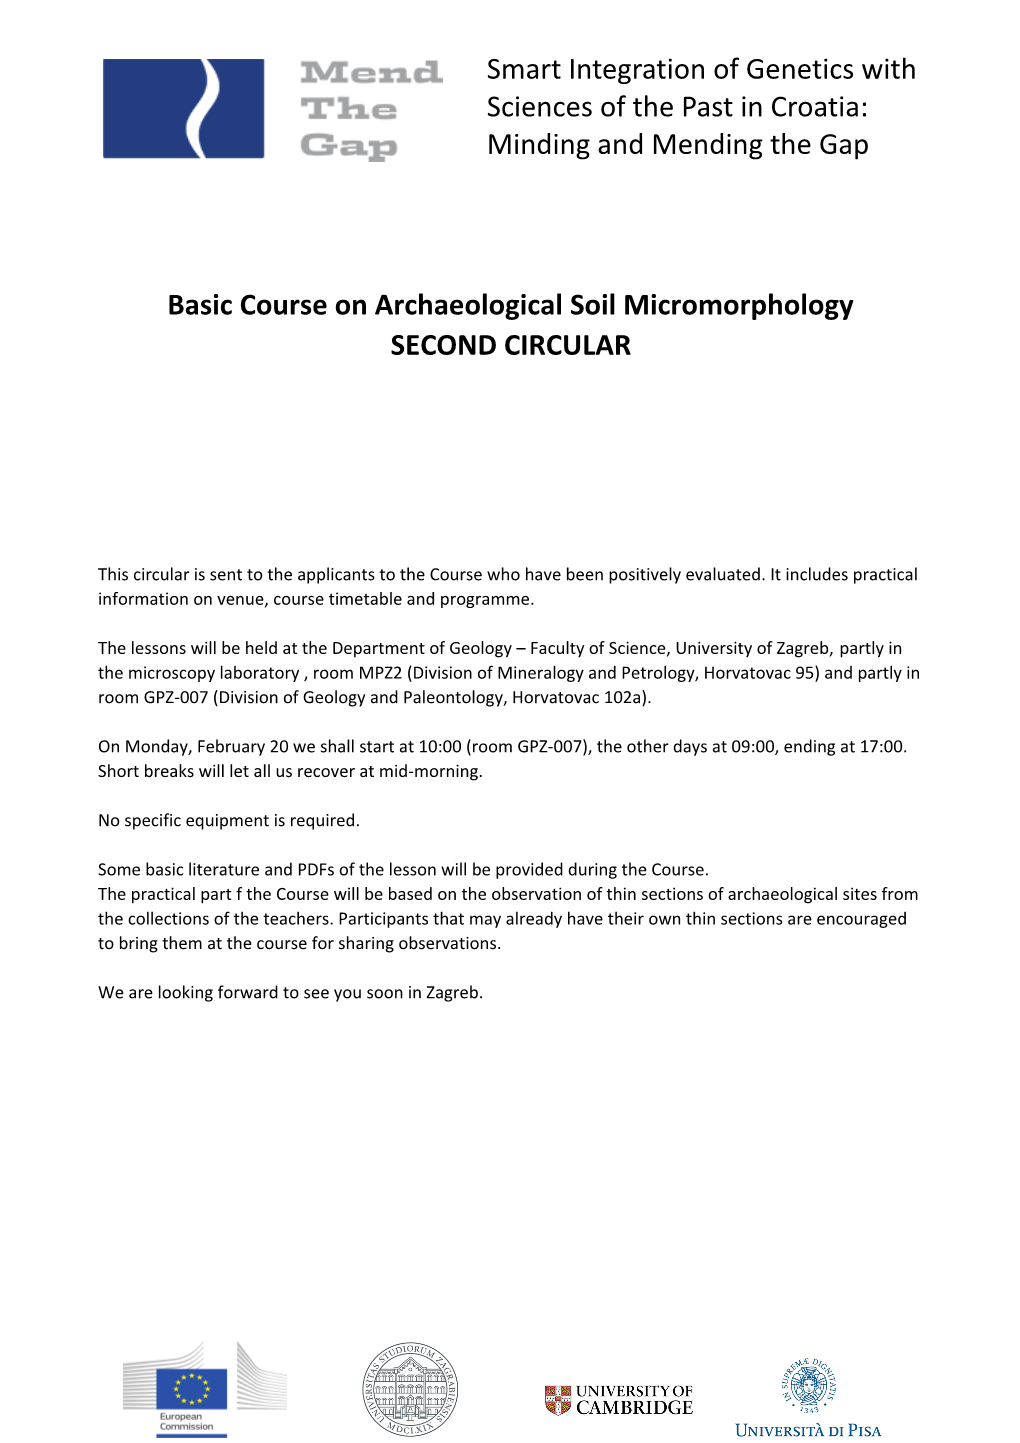 Basic Course on Archaeological Soil Micromorphology